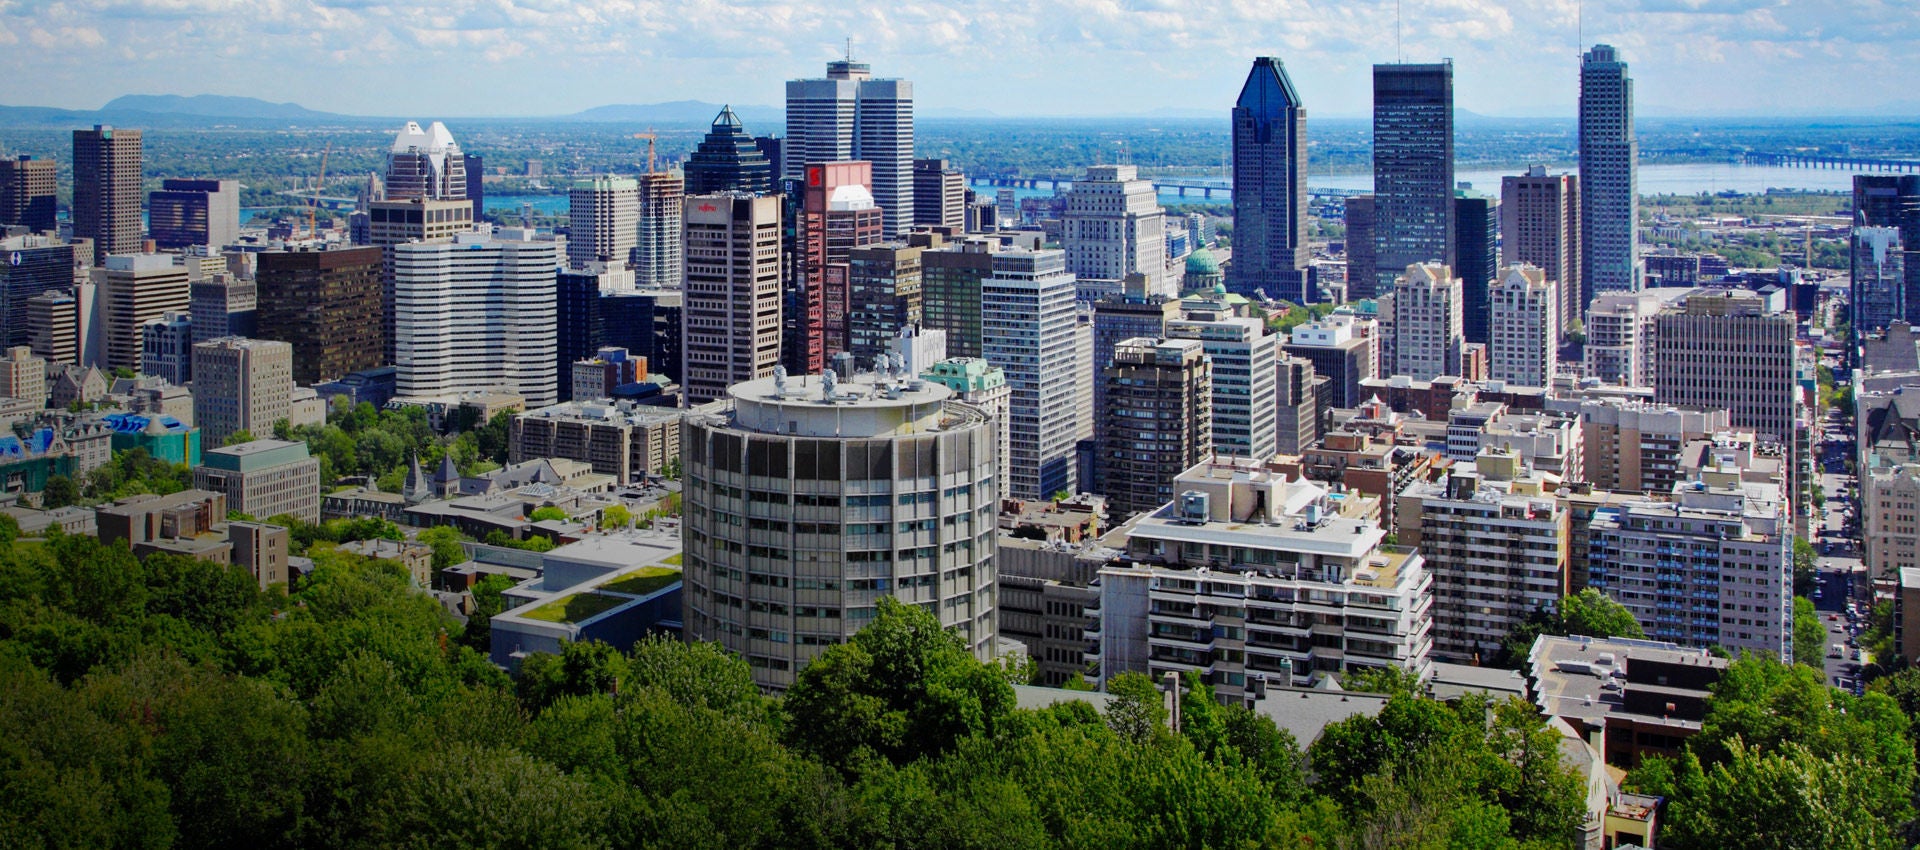 Location Canada Montreal header image 1920x850